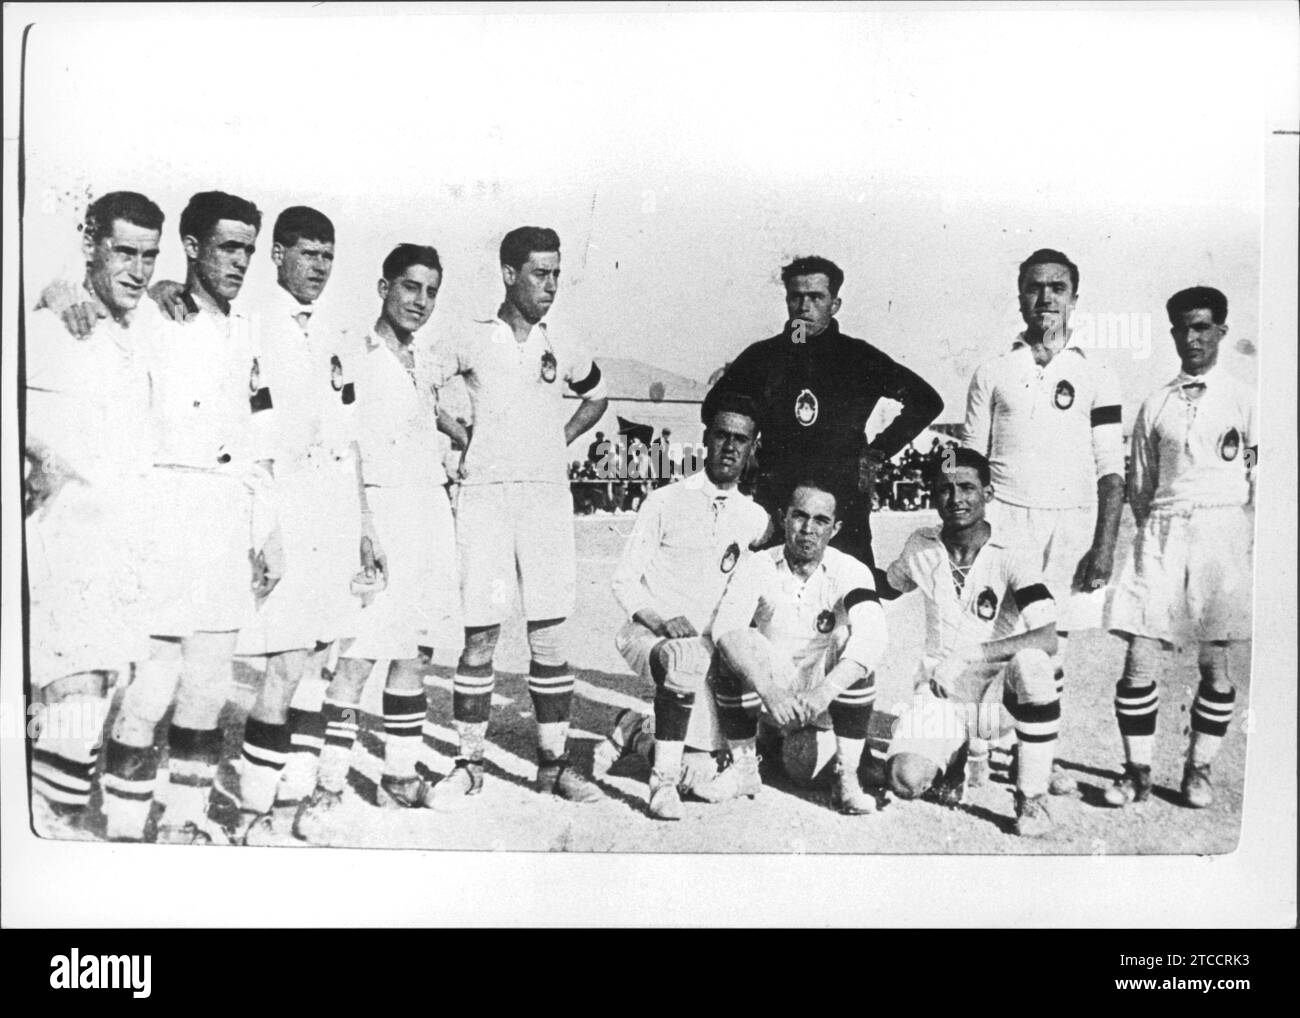 The Elche team in the 1923-1924 season. Suavo, Torremocha, Coca, Segarra, Pérez Ruso, 'Atascat', Pepito Samper, Ruiz, Sansano, Paco González, and Poldo. Credit: Album / Archivo ABC Stock Photo